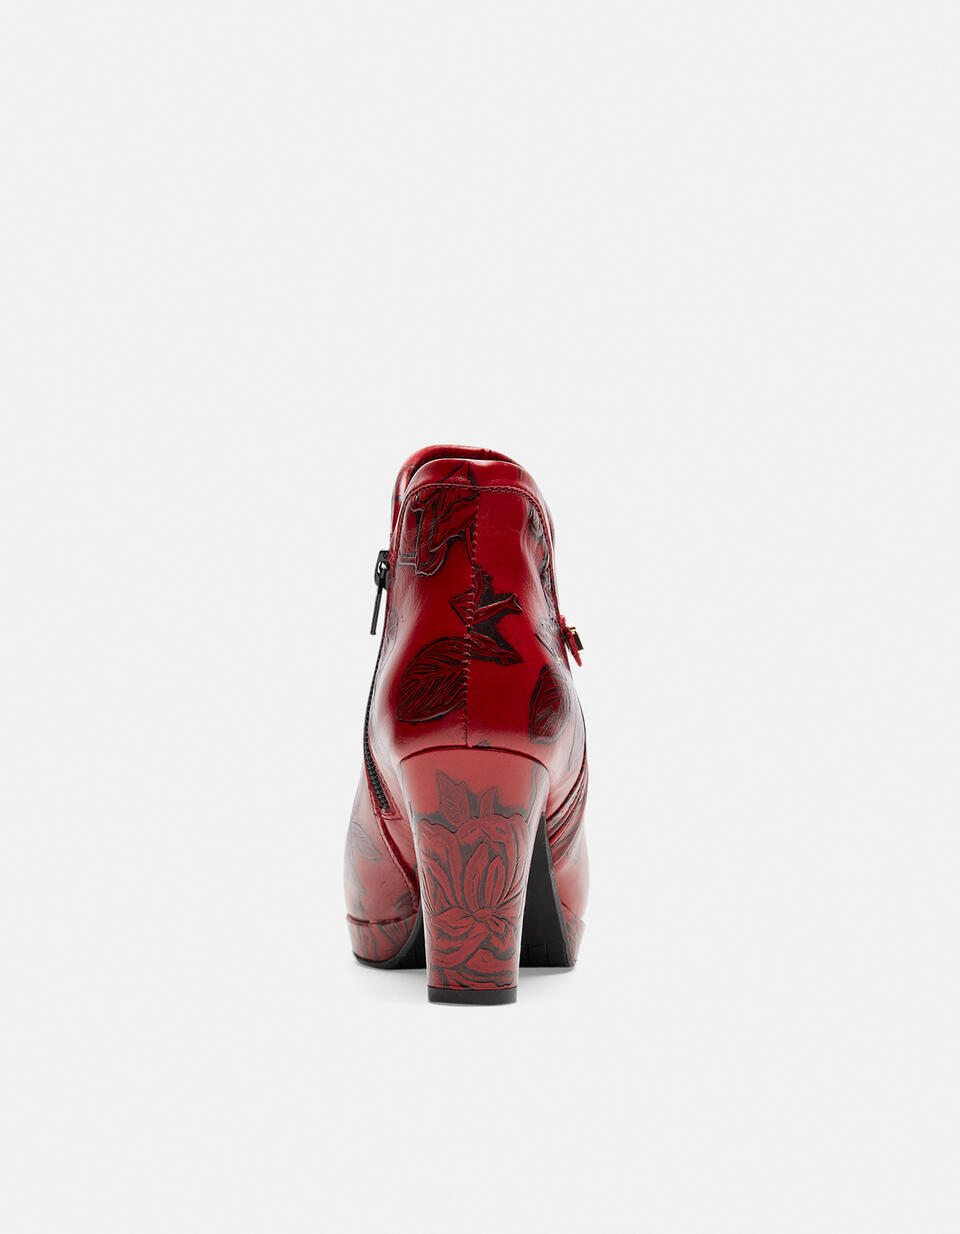 Mimi ankle boots - Women Shoes | Shoes ROSSO - Women Shoes | ShoesCuoieria Fiorentina